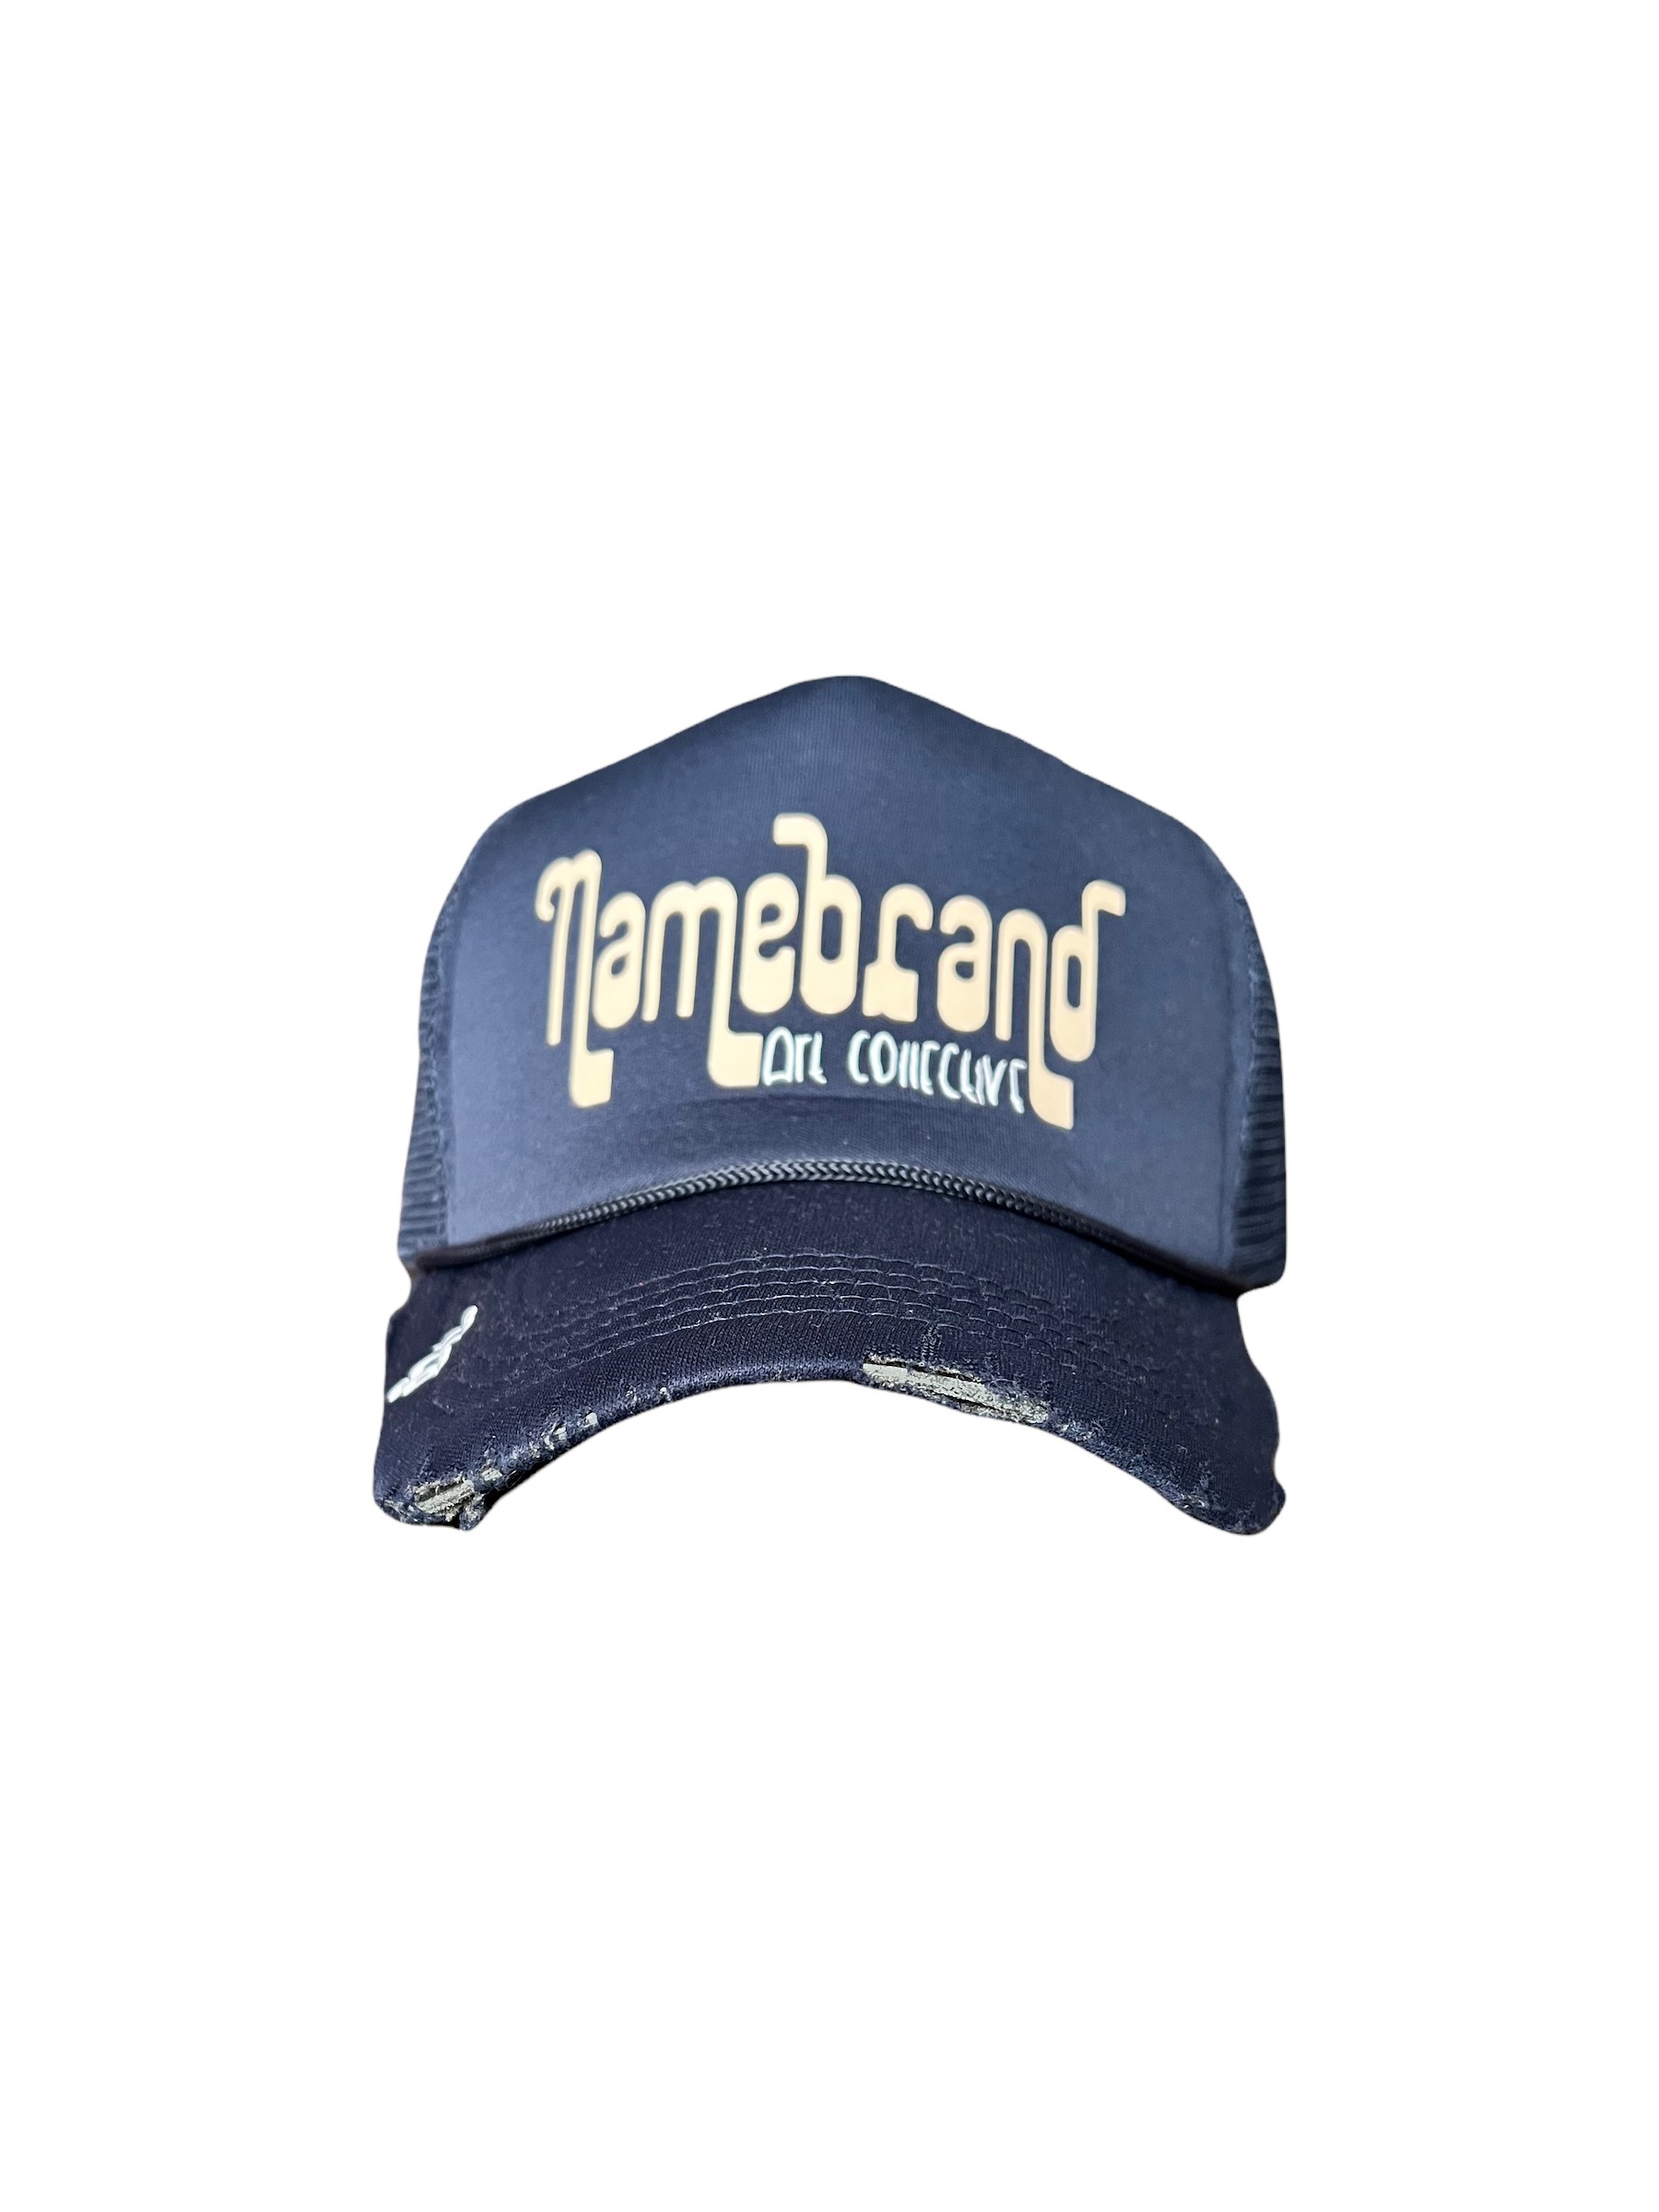 Namebrand Art Collective - Midnight Blue Hat